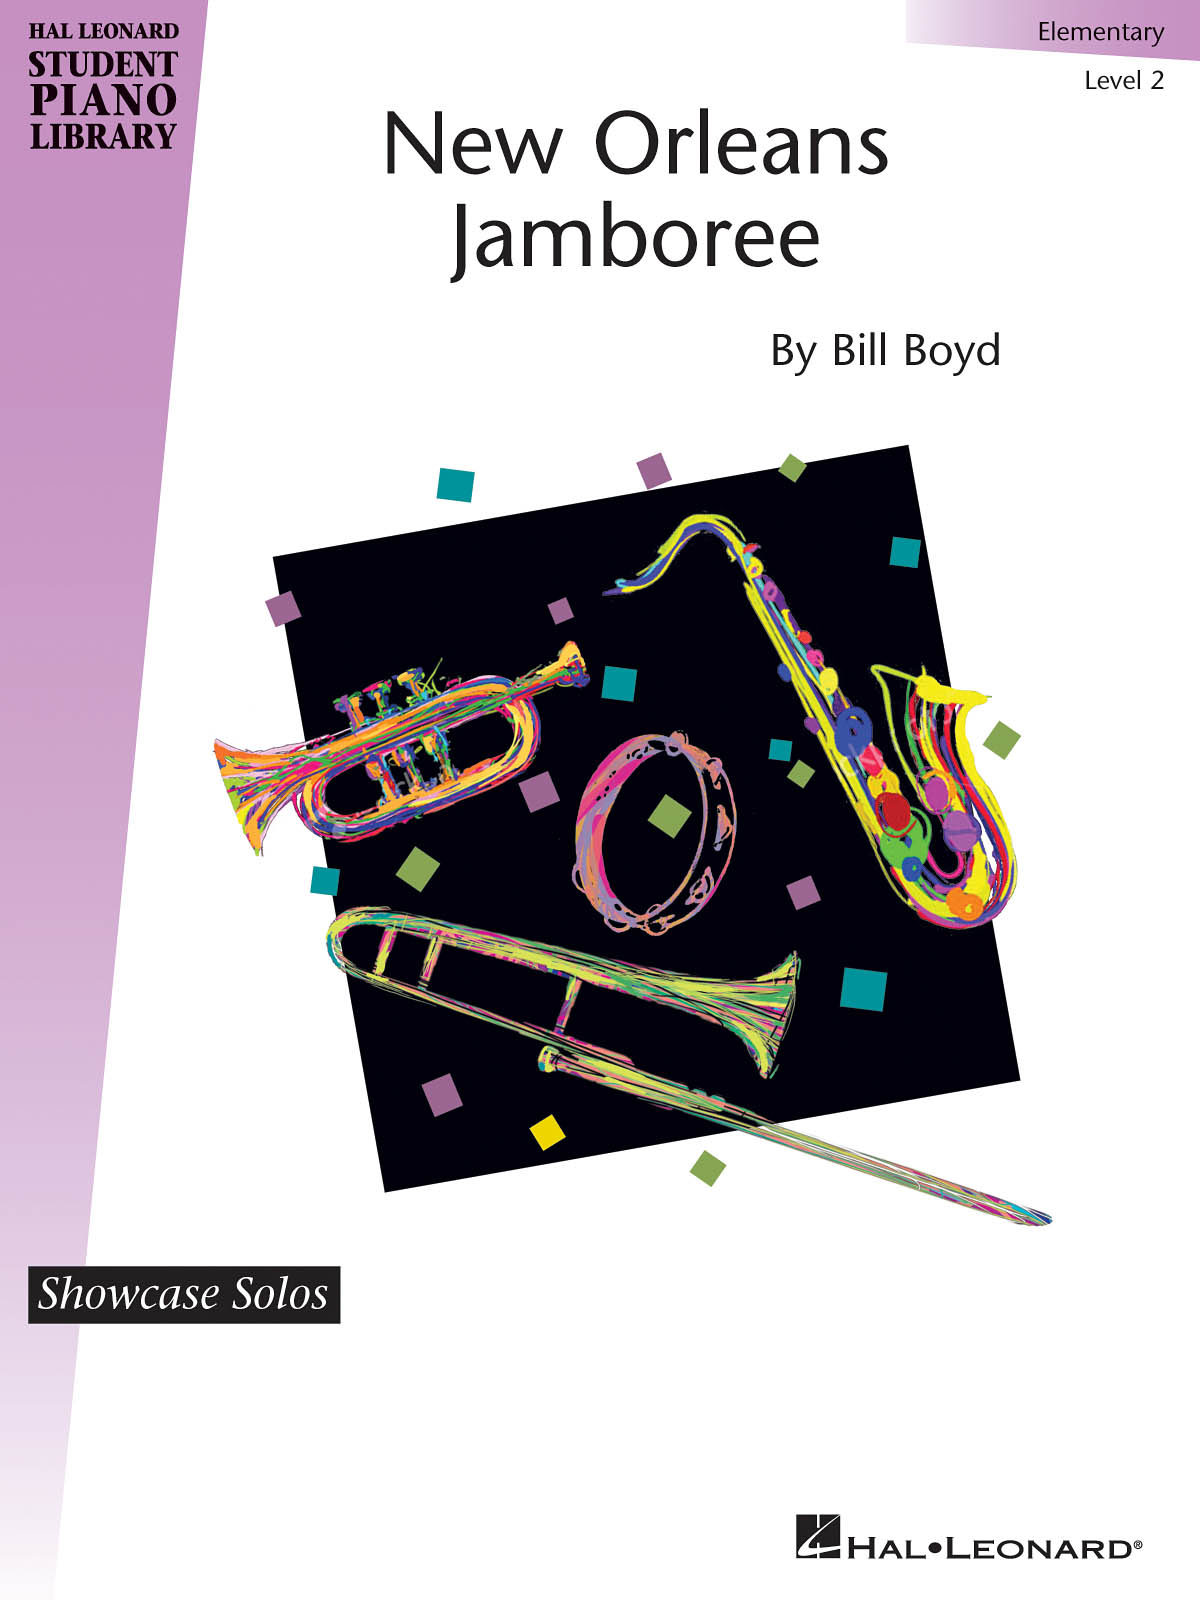 New Orleans Jamboree(Showcase Solos Level 2 – Elementary)